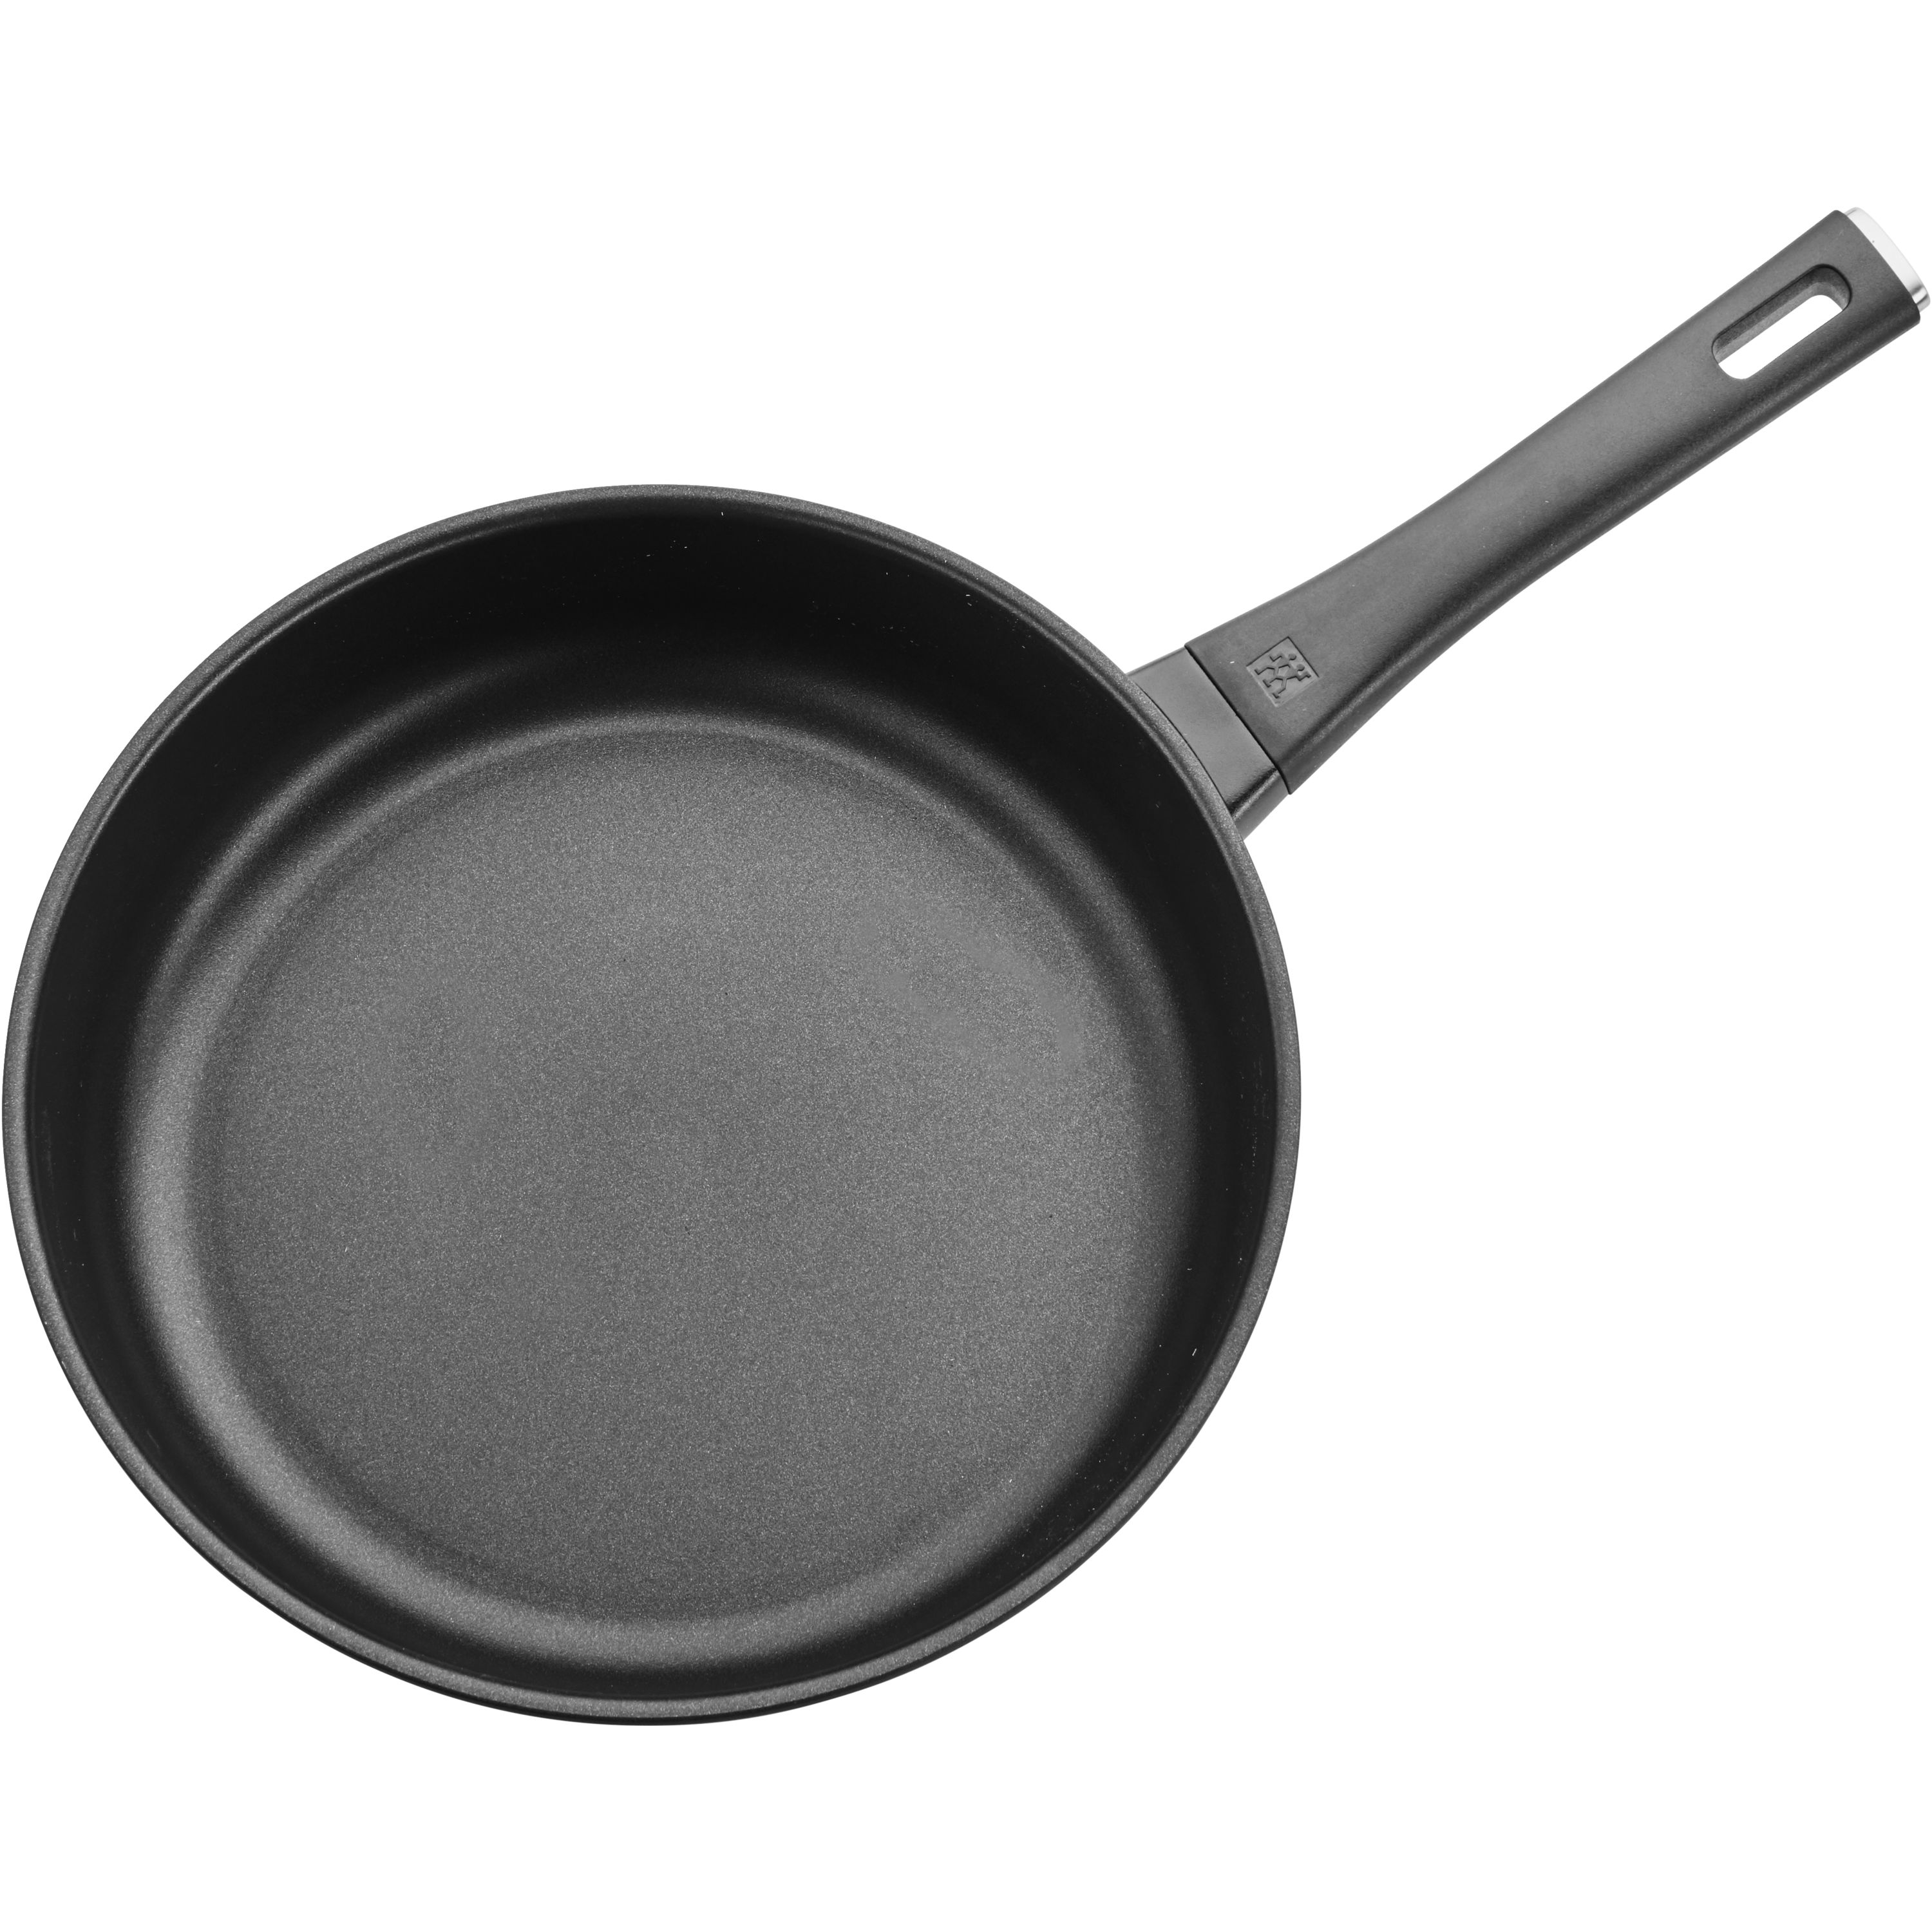 Zwilling Madura Plus Nonstick Fry Pan, 11-inch